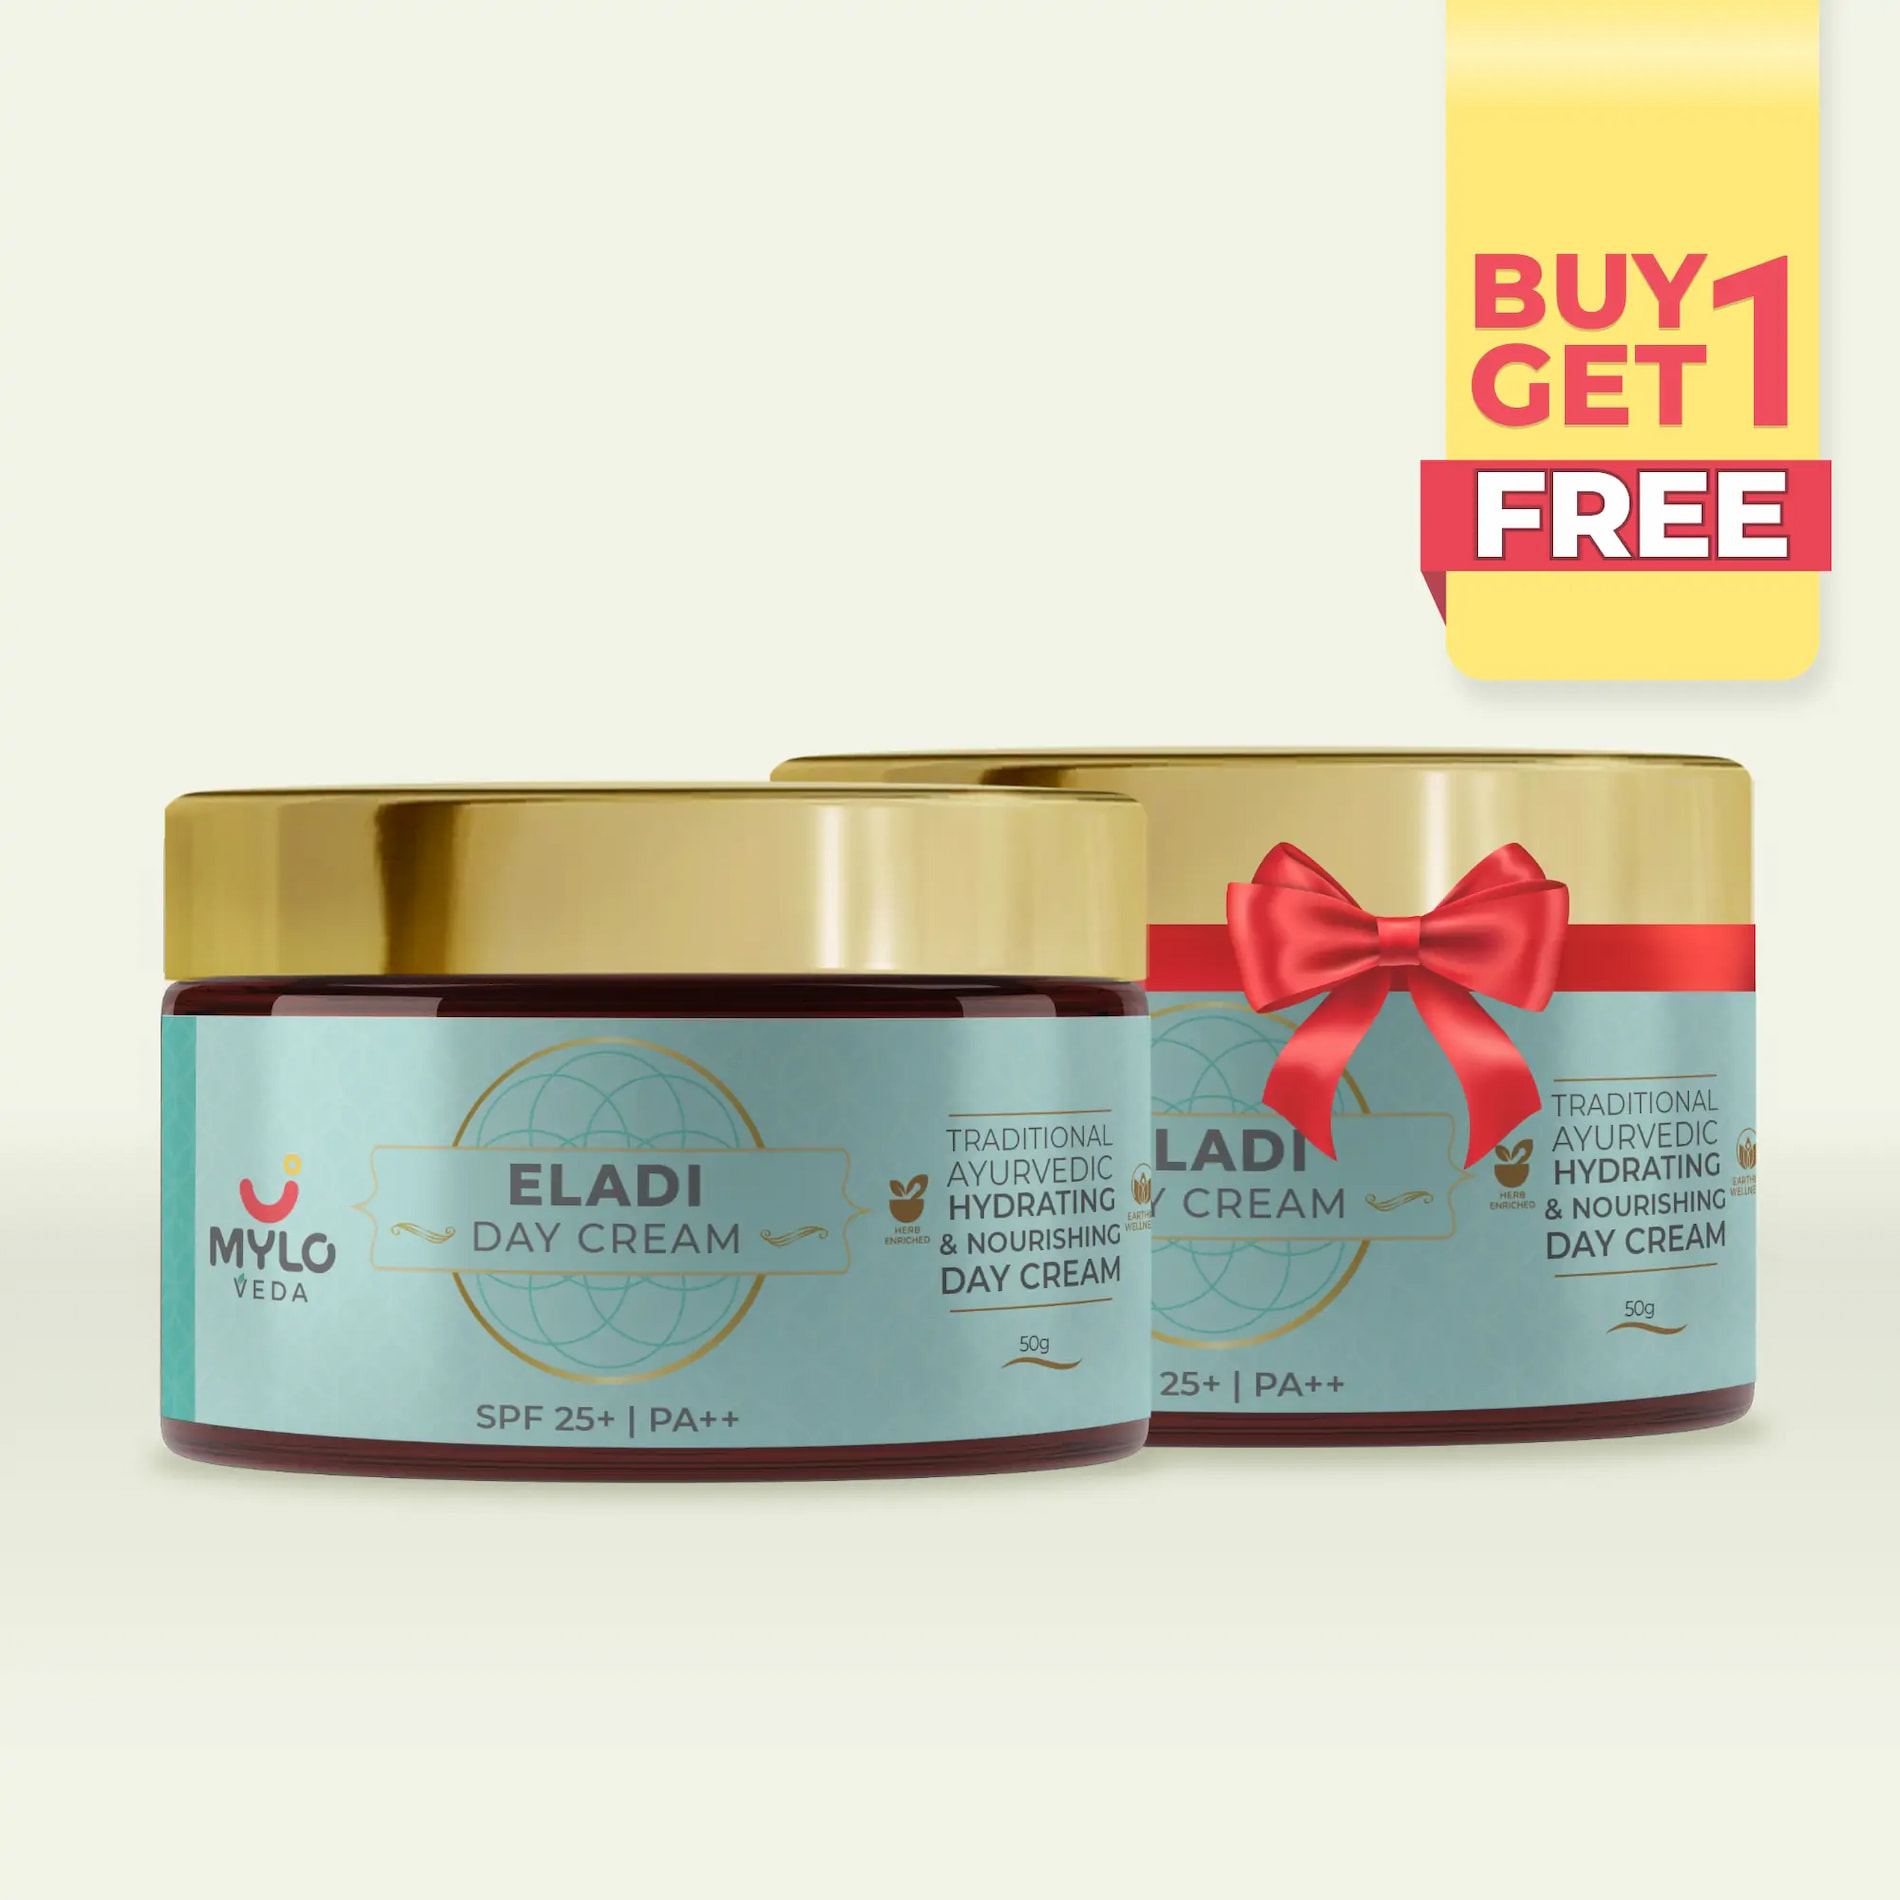 Mylo Eladi Day Cream 50g - Buy 1 Get 1 FREE